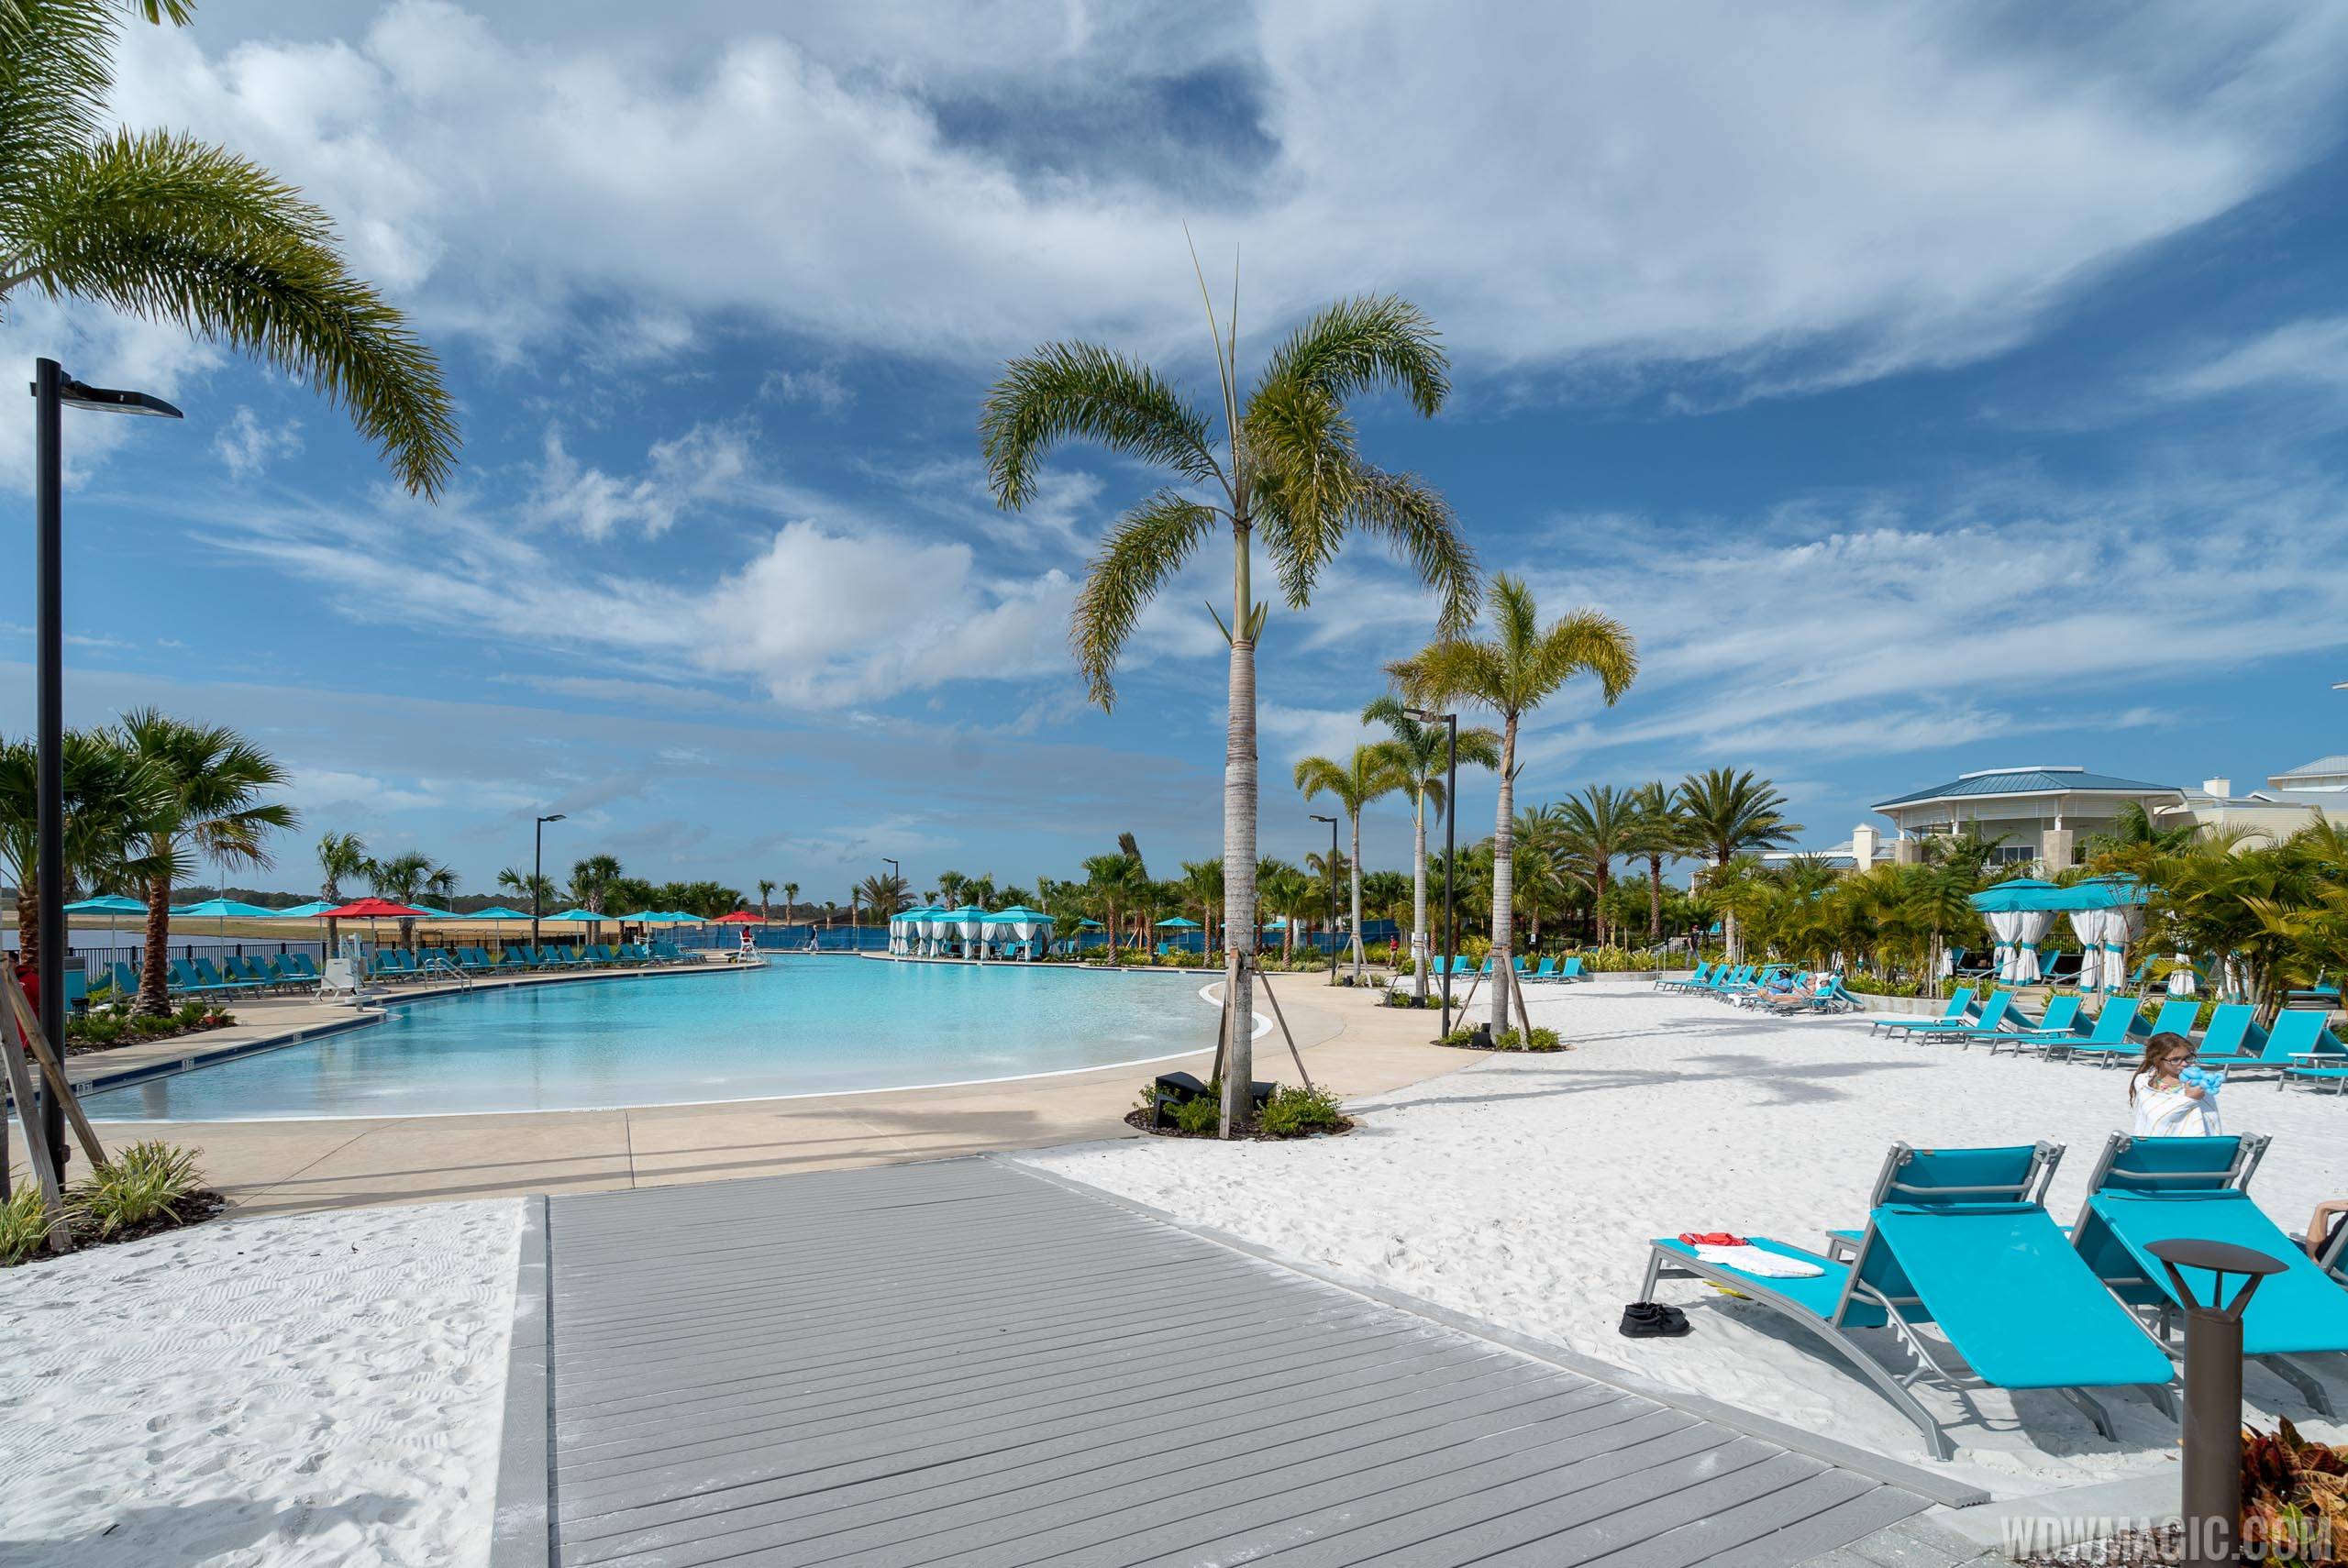 Margaritaville Resort Orlando tour